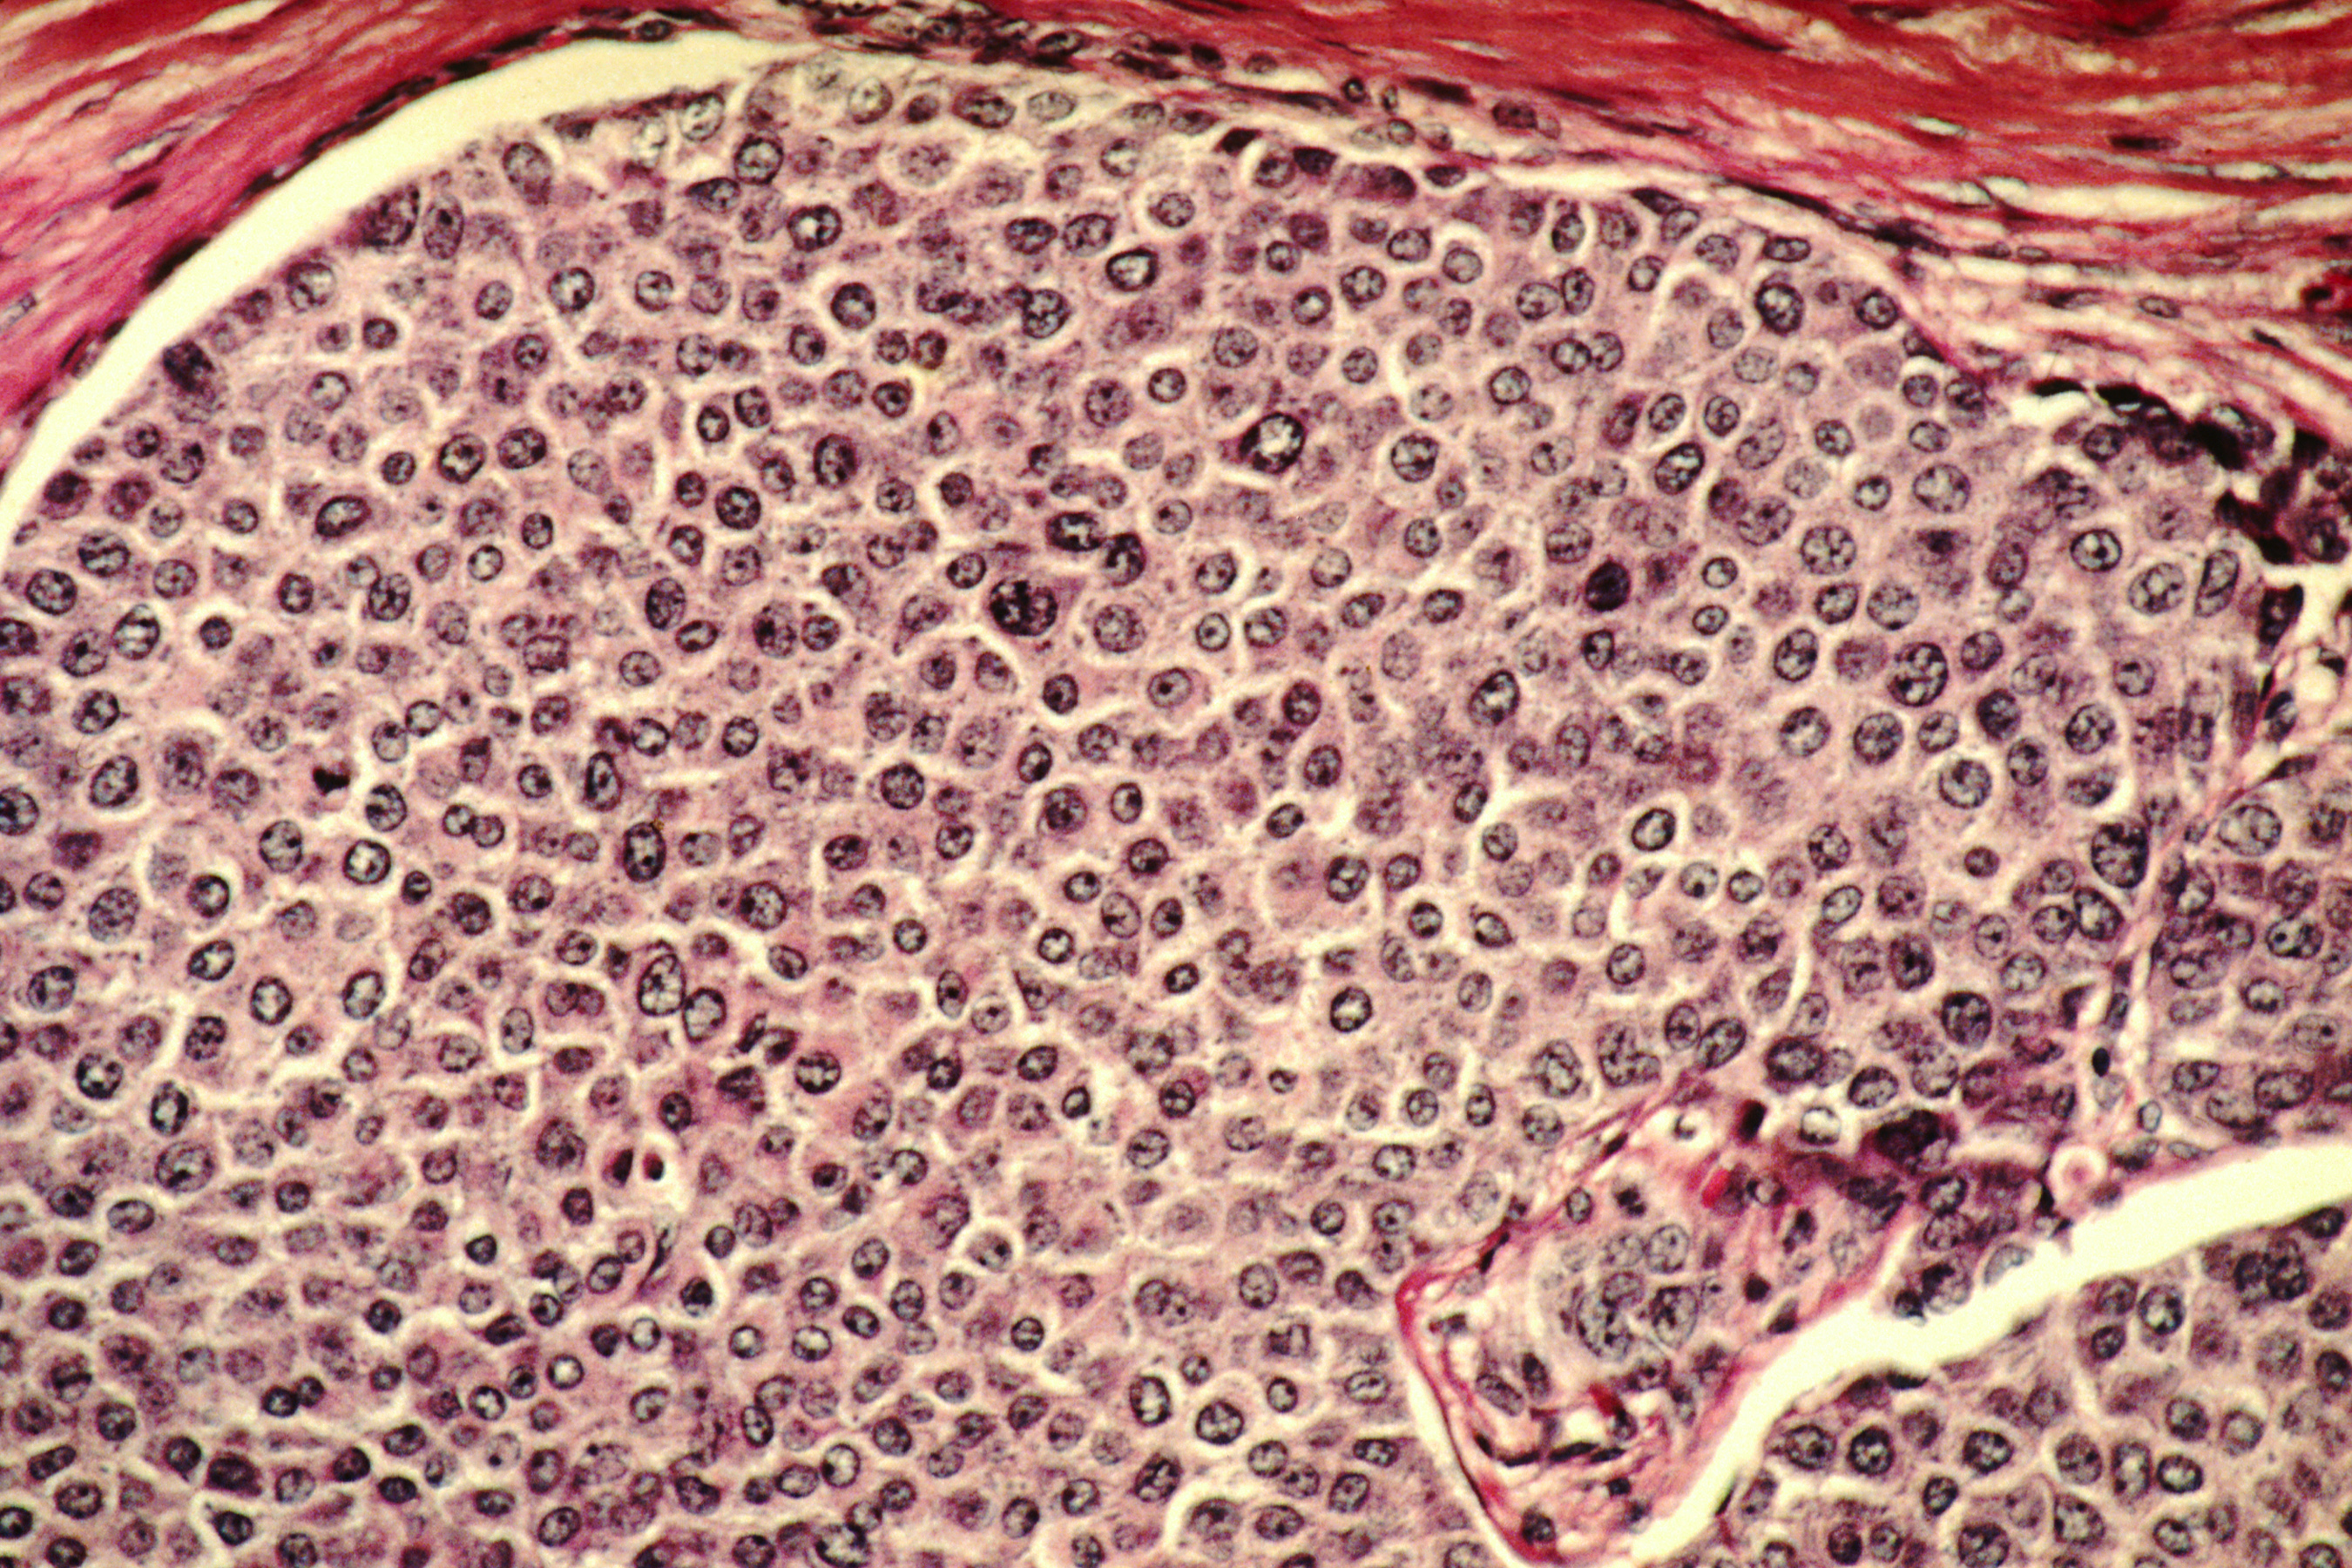 Breast_cancer_cells.jpg